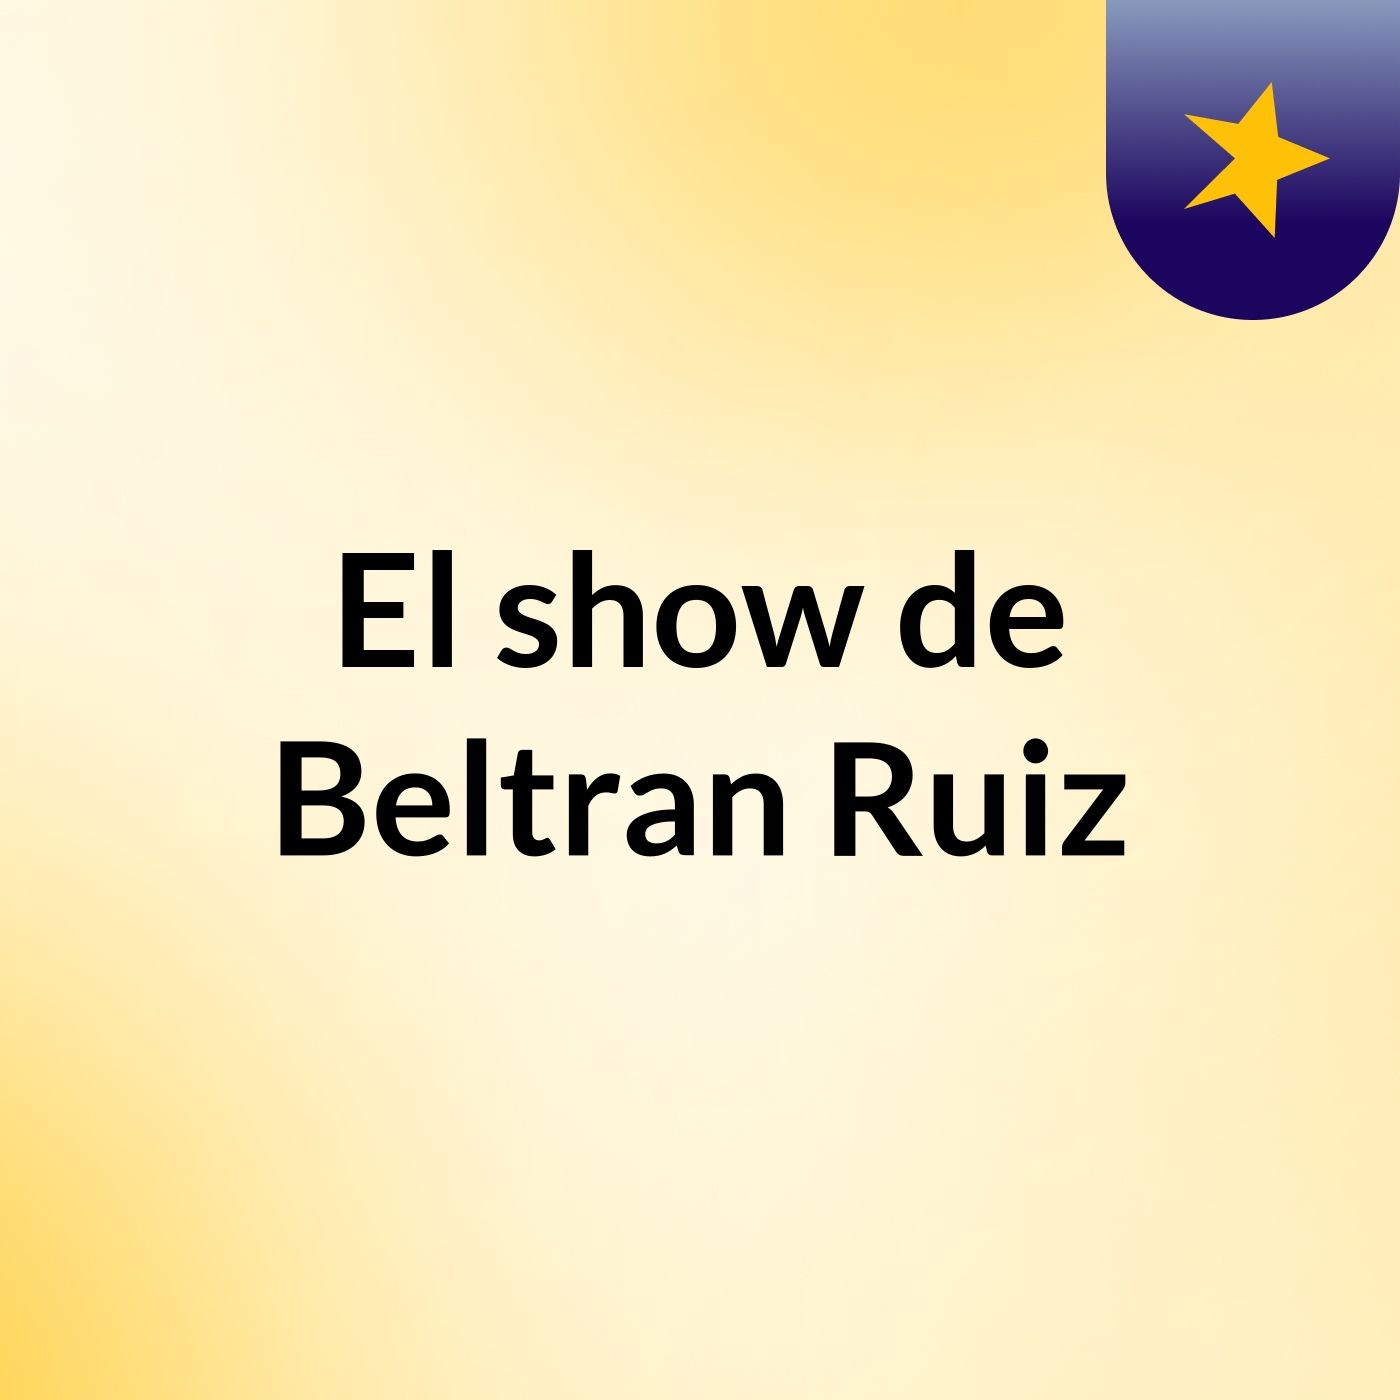 El show de Beltran Ruiz